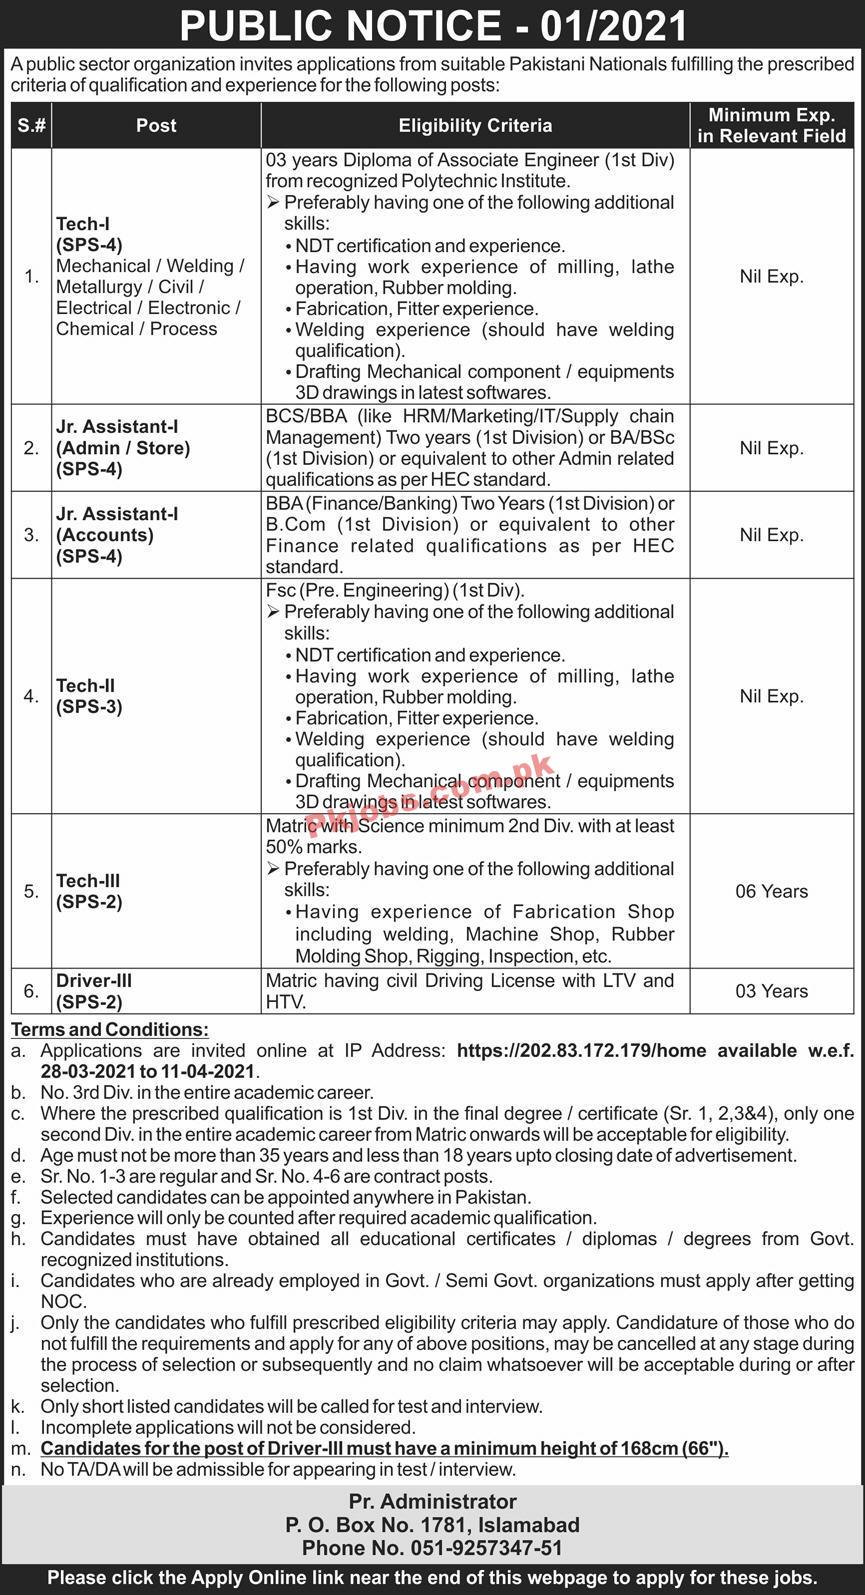 Pakistan Atomic Energy Commission (PAEC) Latest PK Jobs 2021